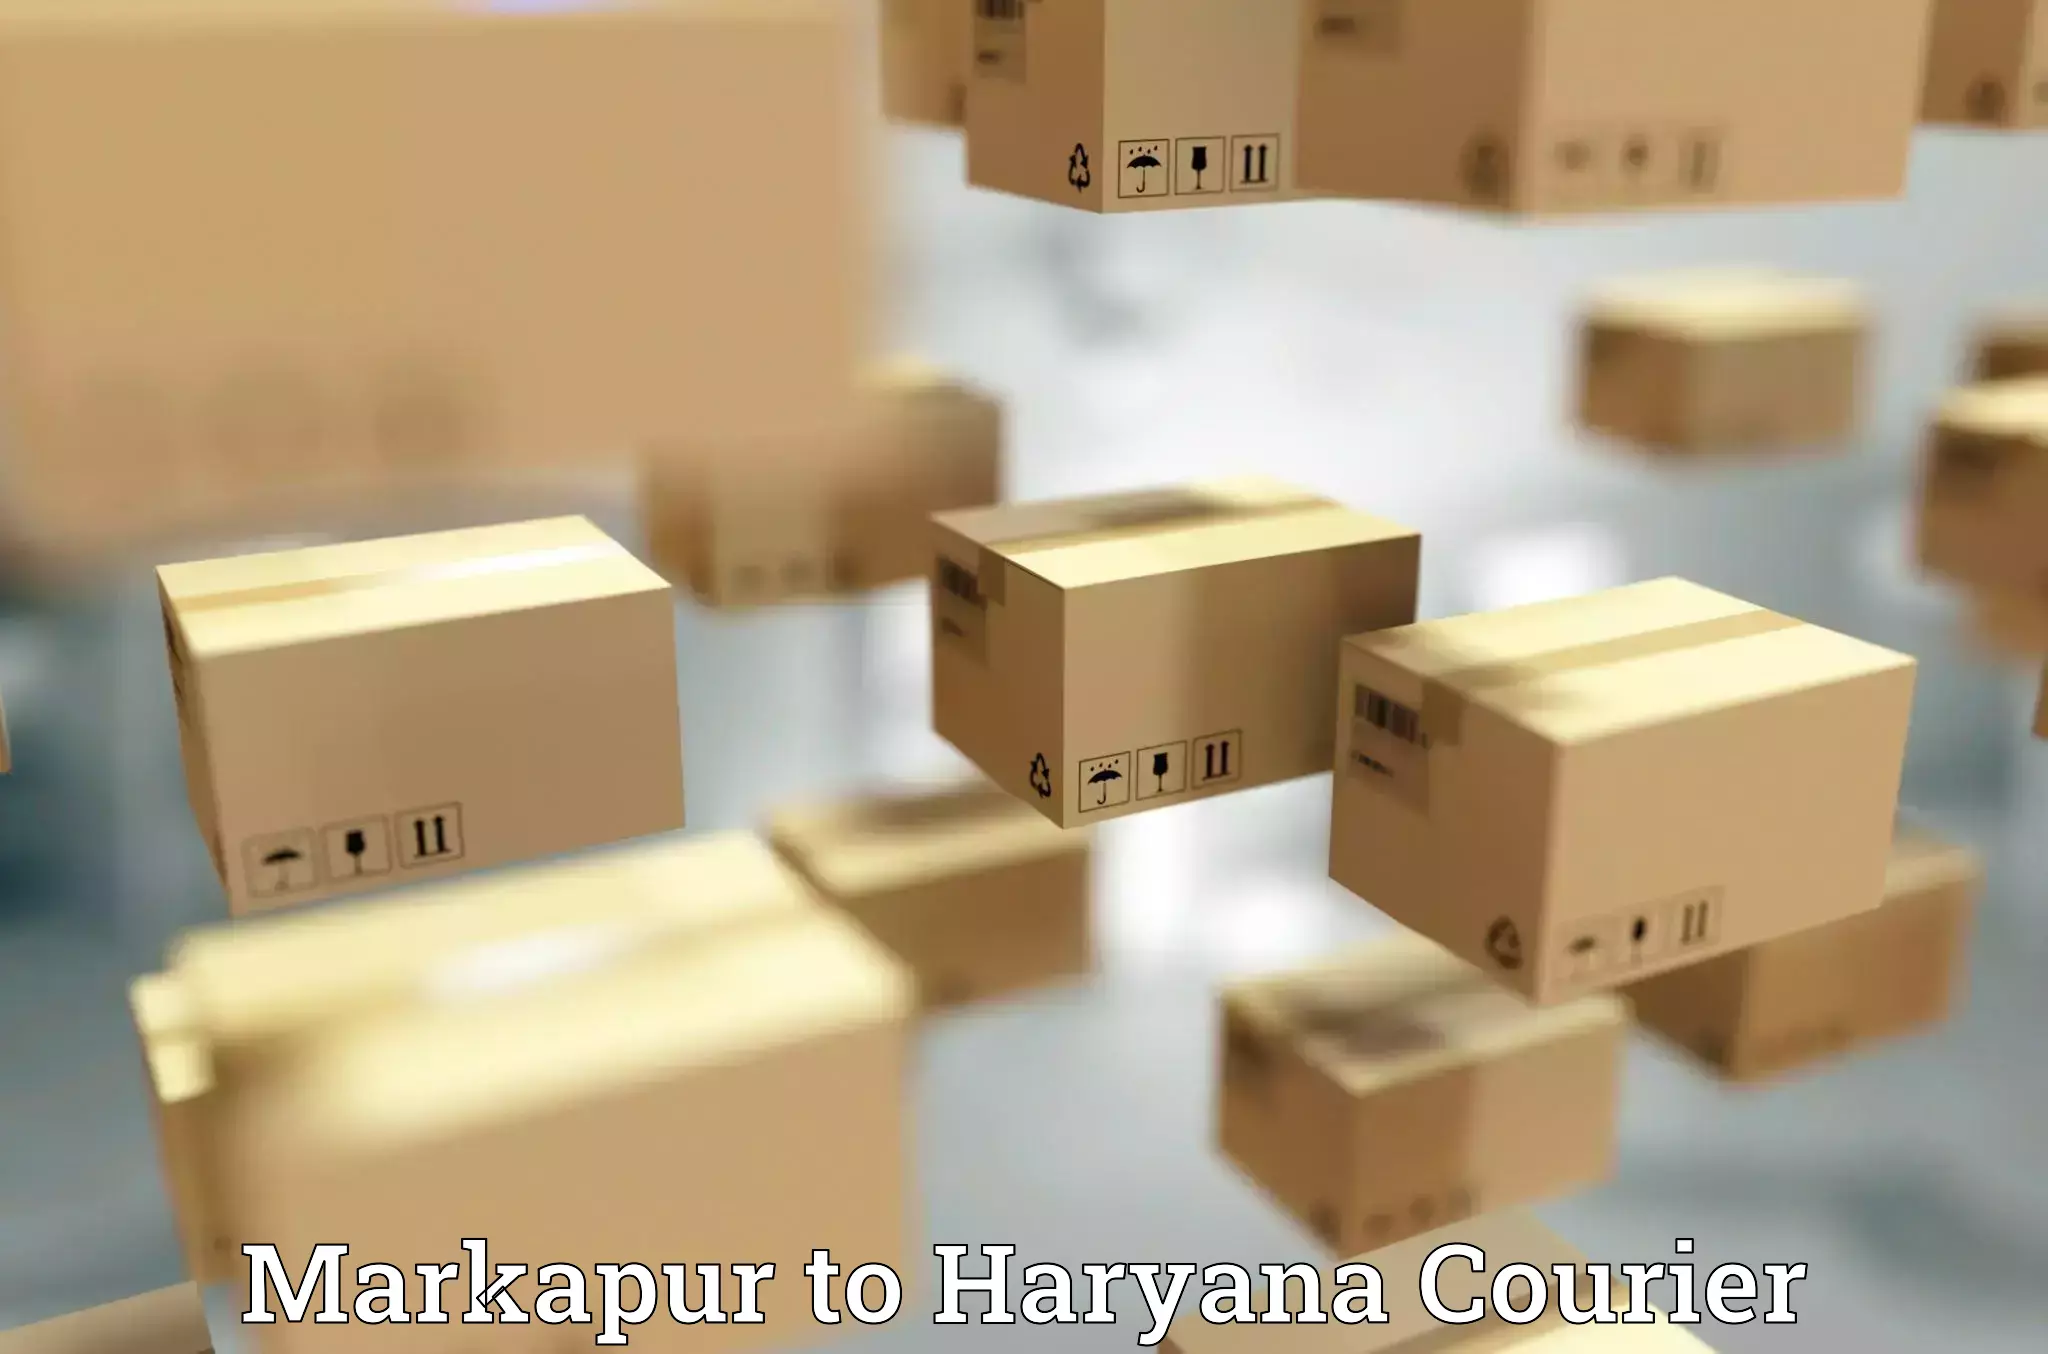 Courier service comparison Markapur to Hodal